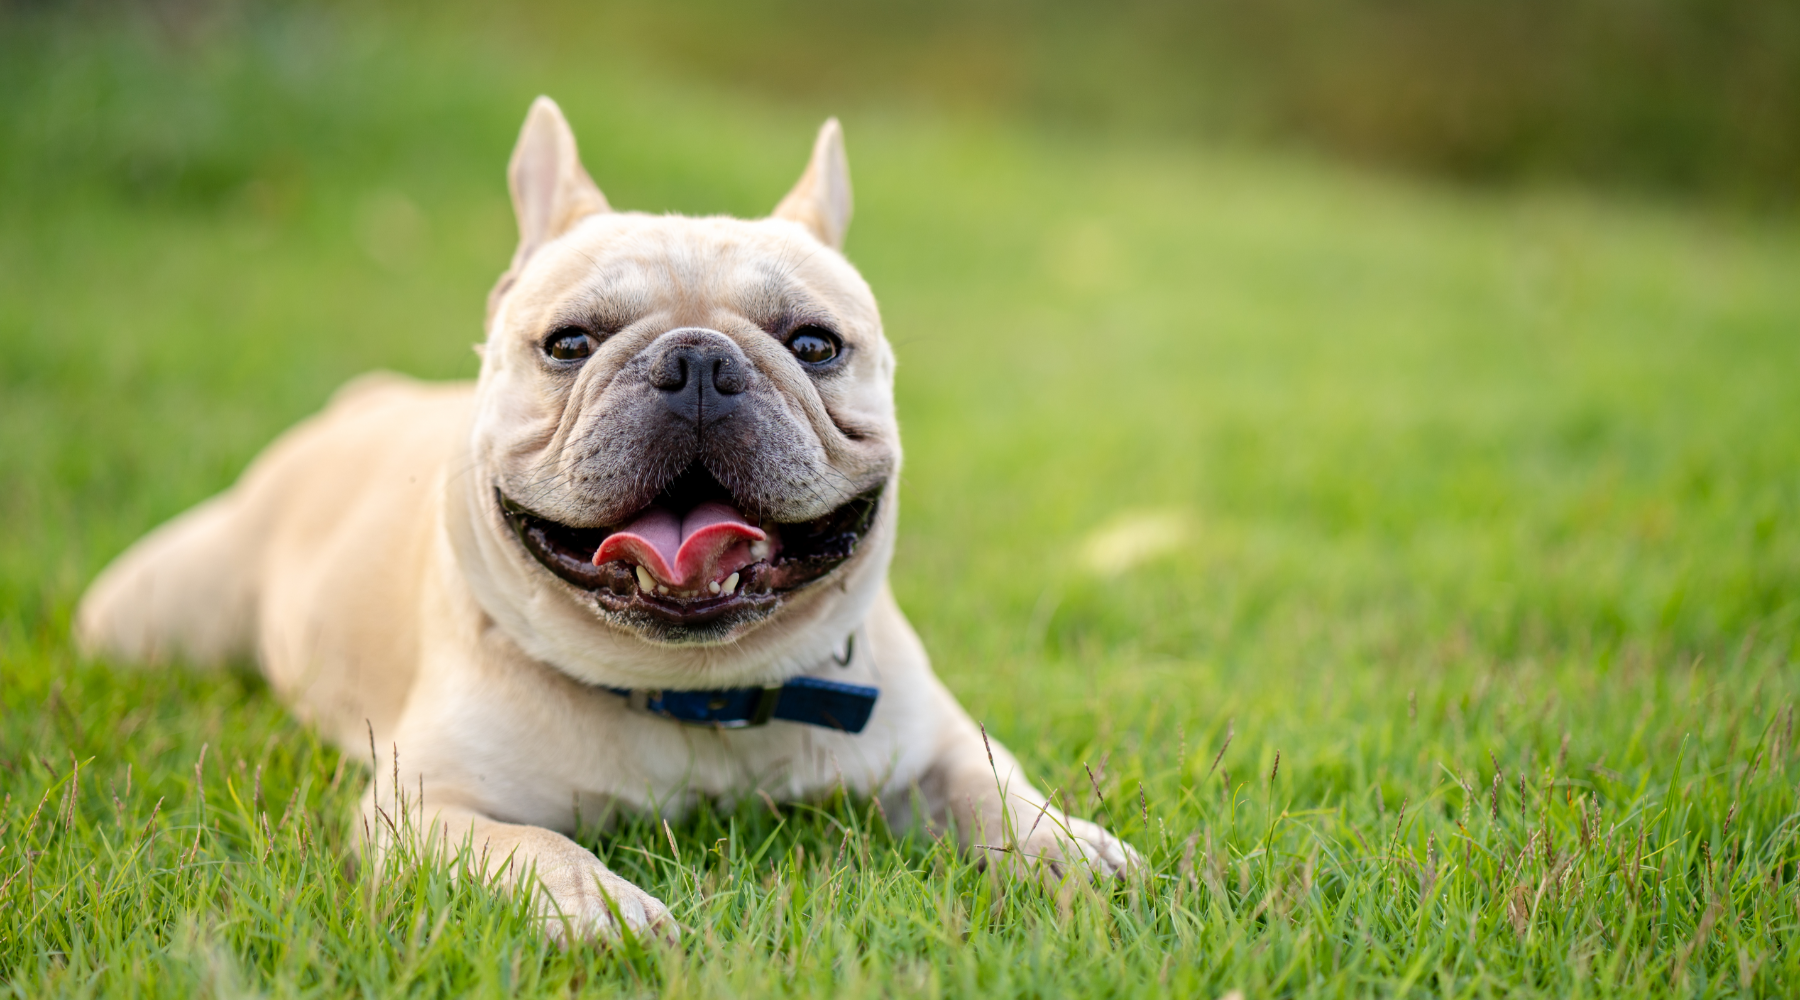 French Bulldog lying on grass